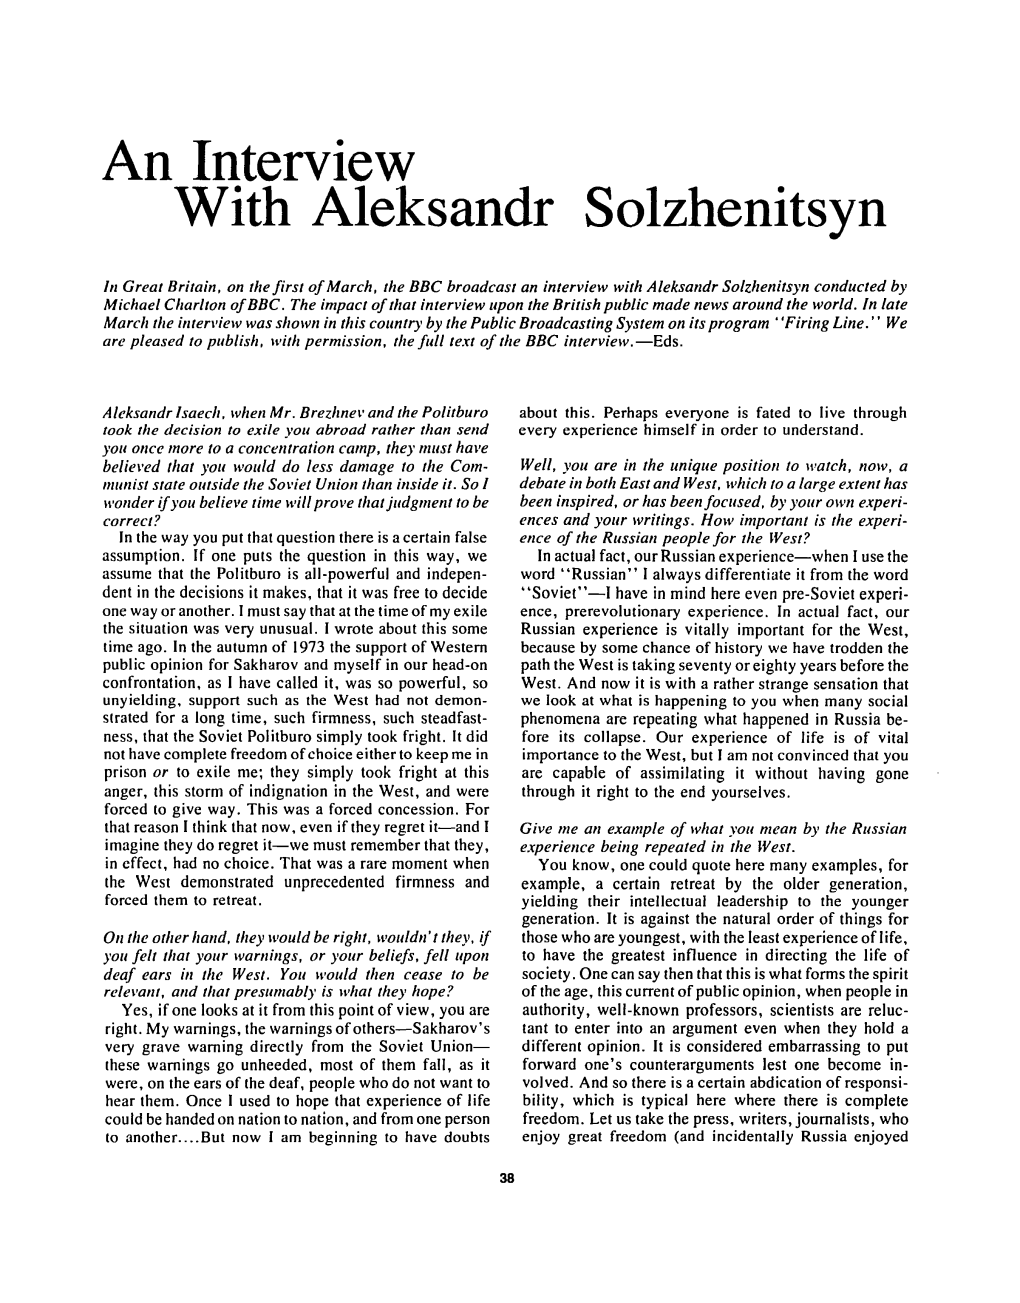 An Interview with Aleksandr Solzhenitsyn